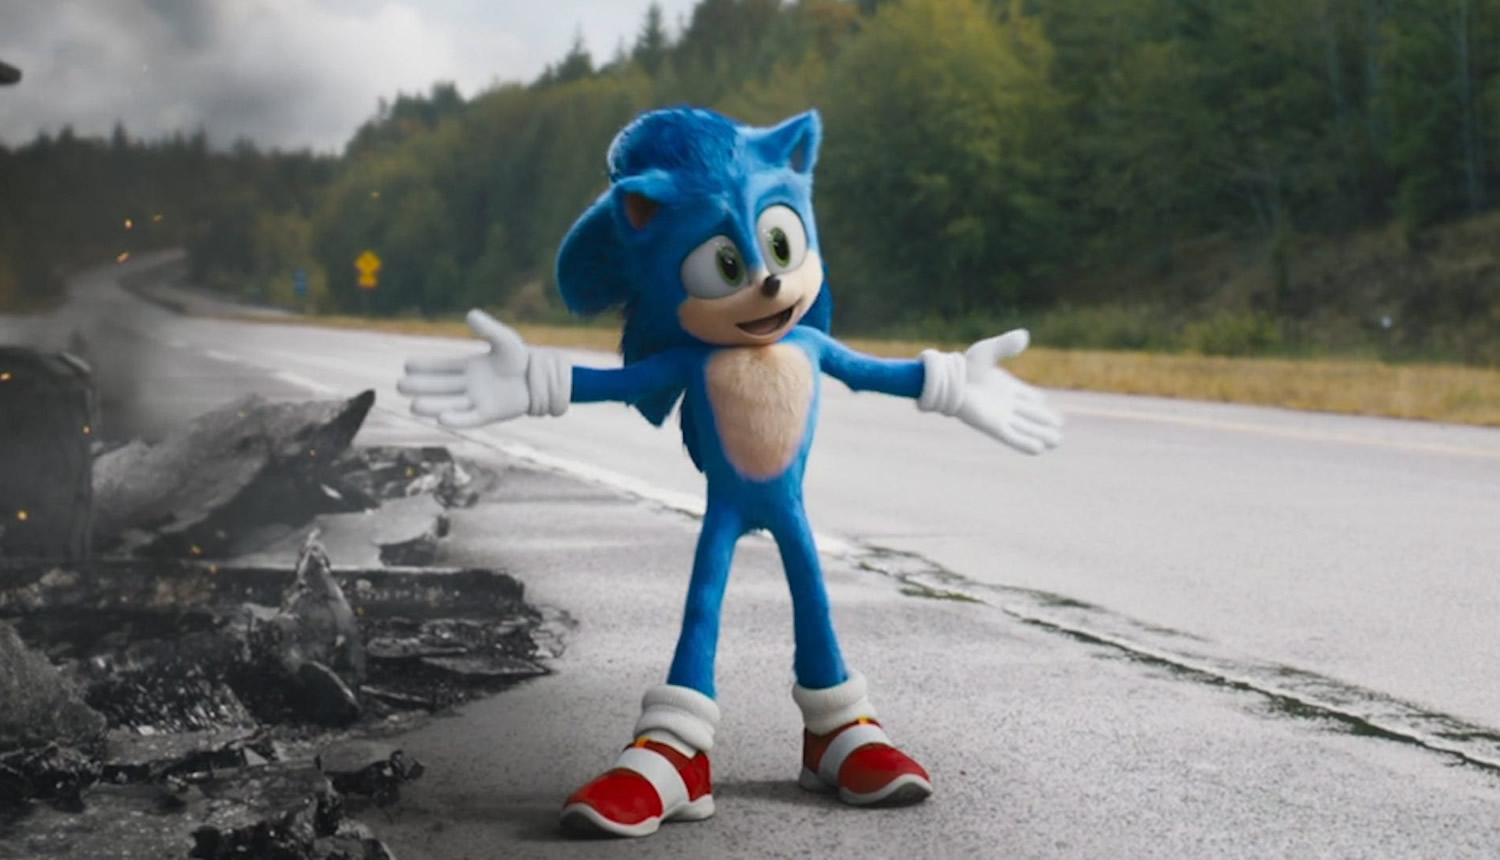 Sonic the Hedgehog 2020: we reveal the soundtrack, trailer, cast